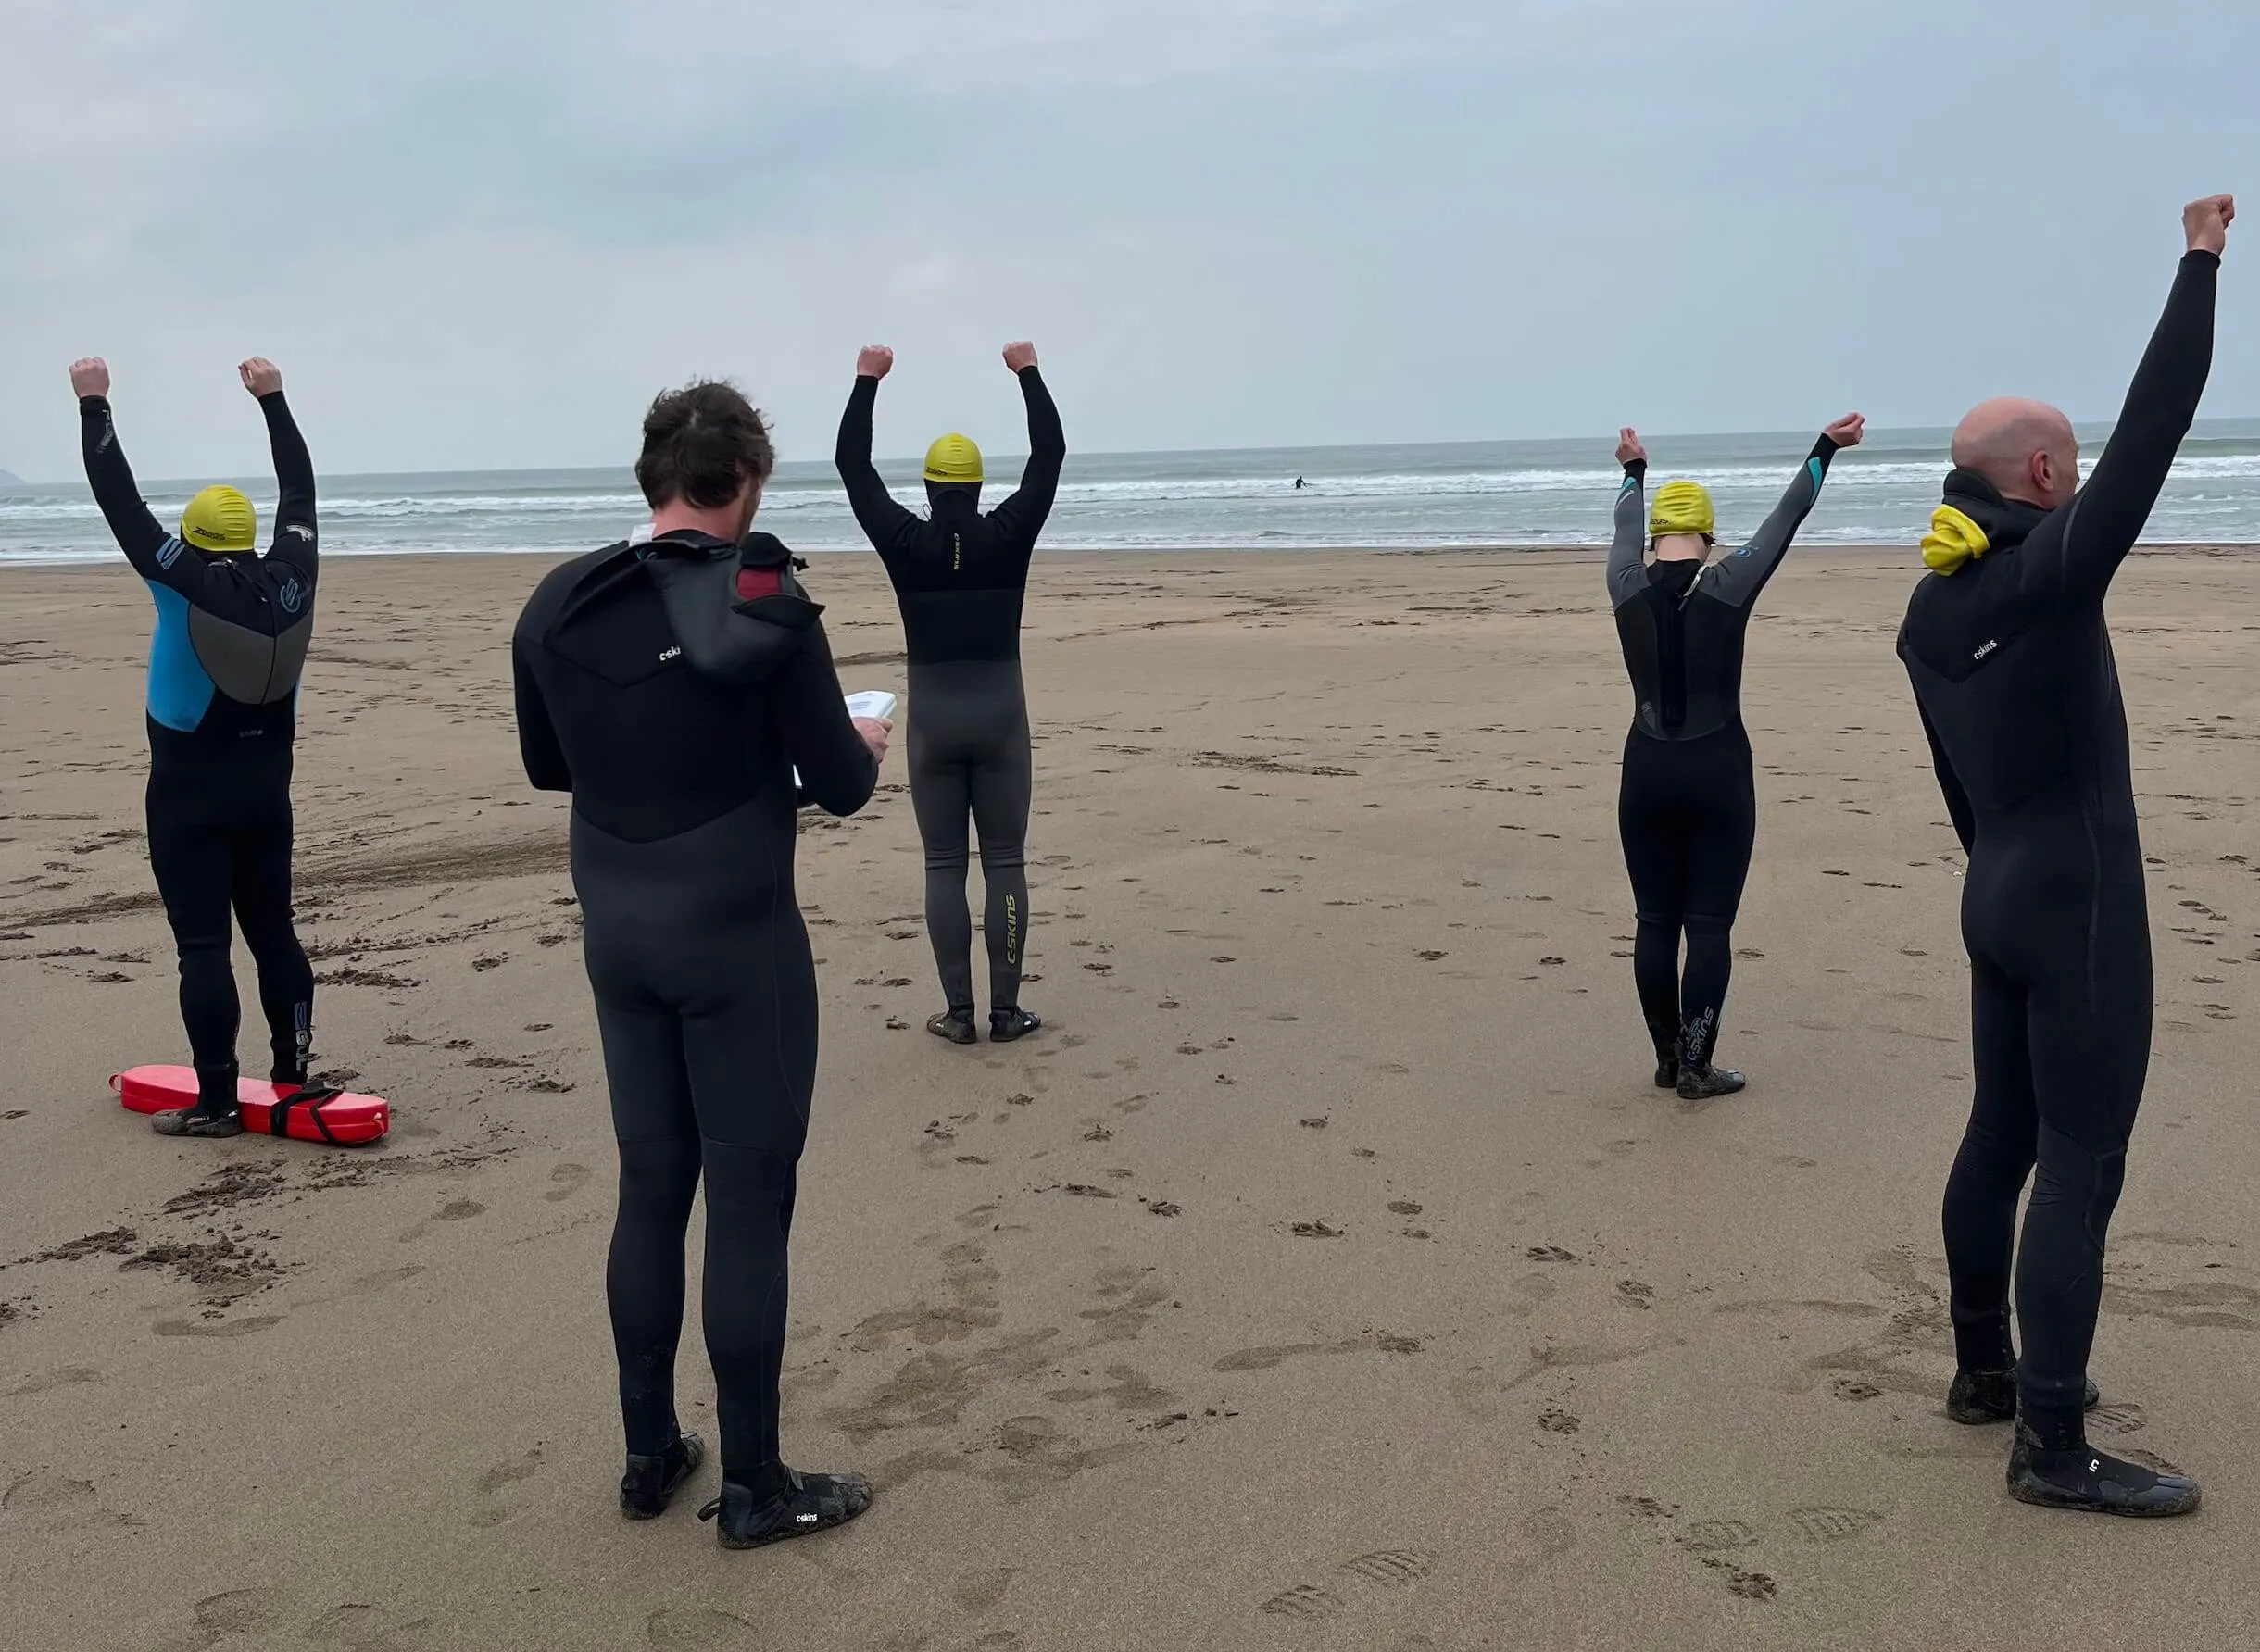 beach lifeguard trainees being tested on beach lifeguard signals